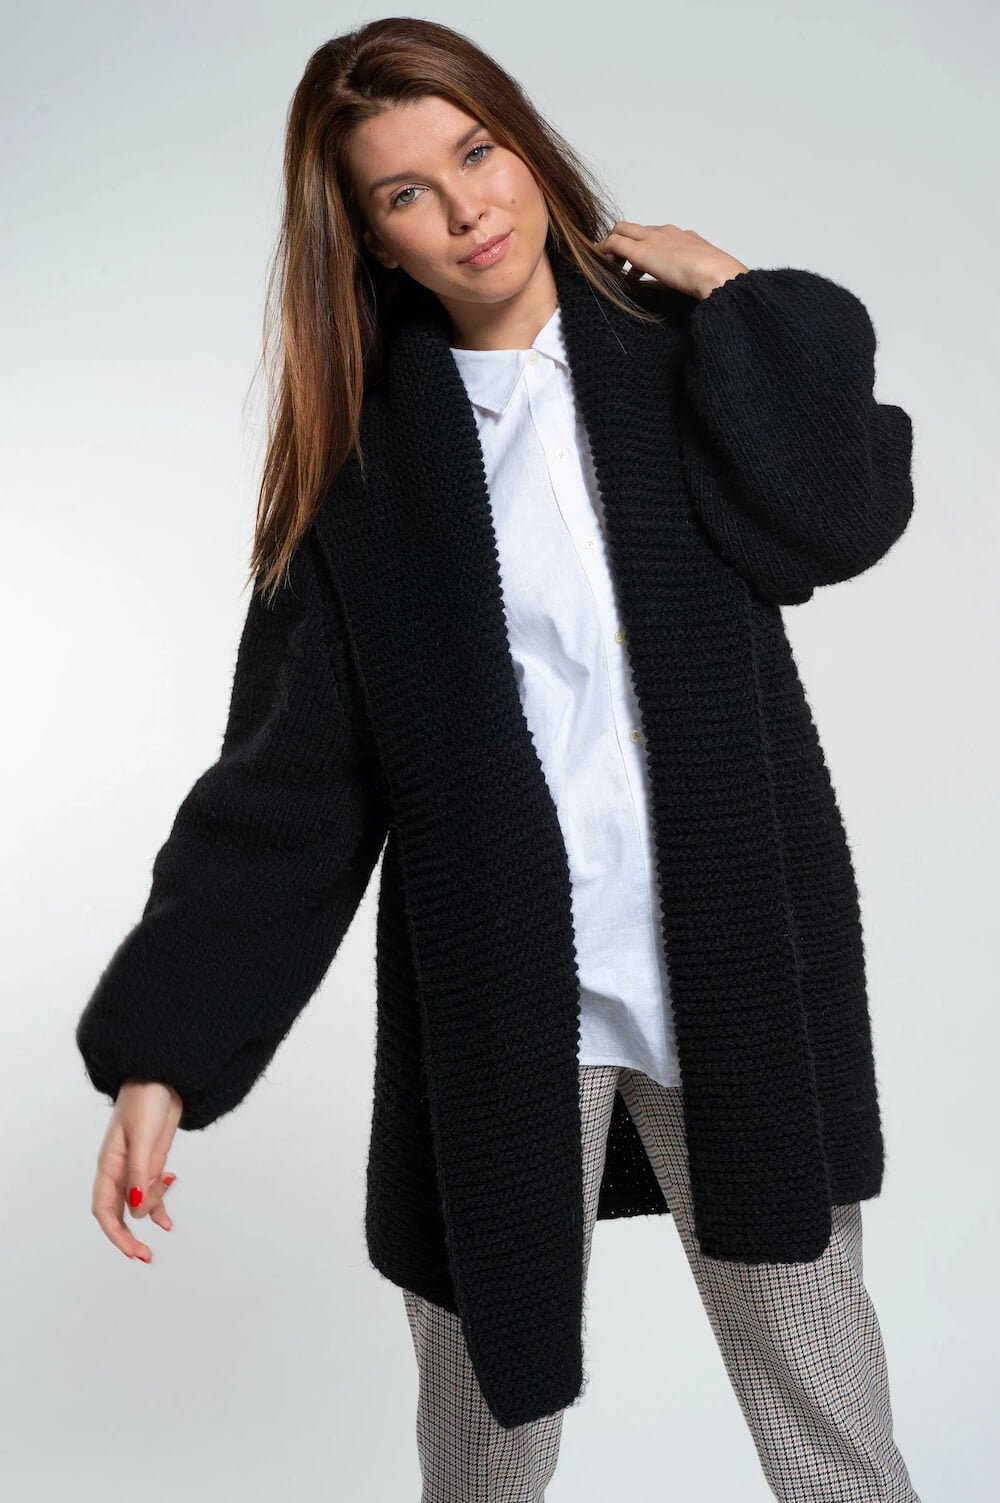 midi chunky woolen cardigan for women